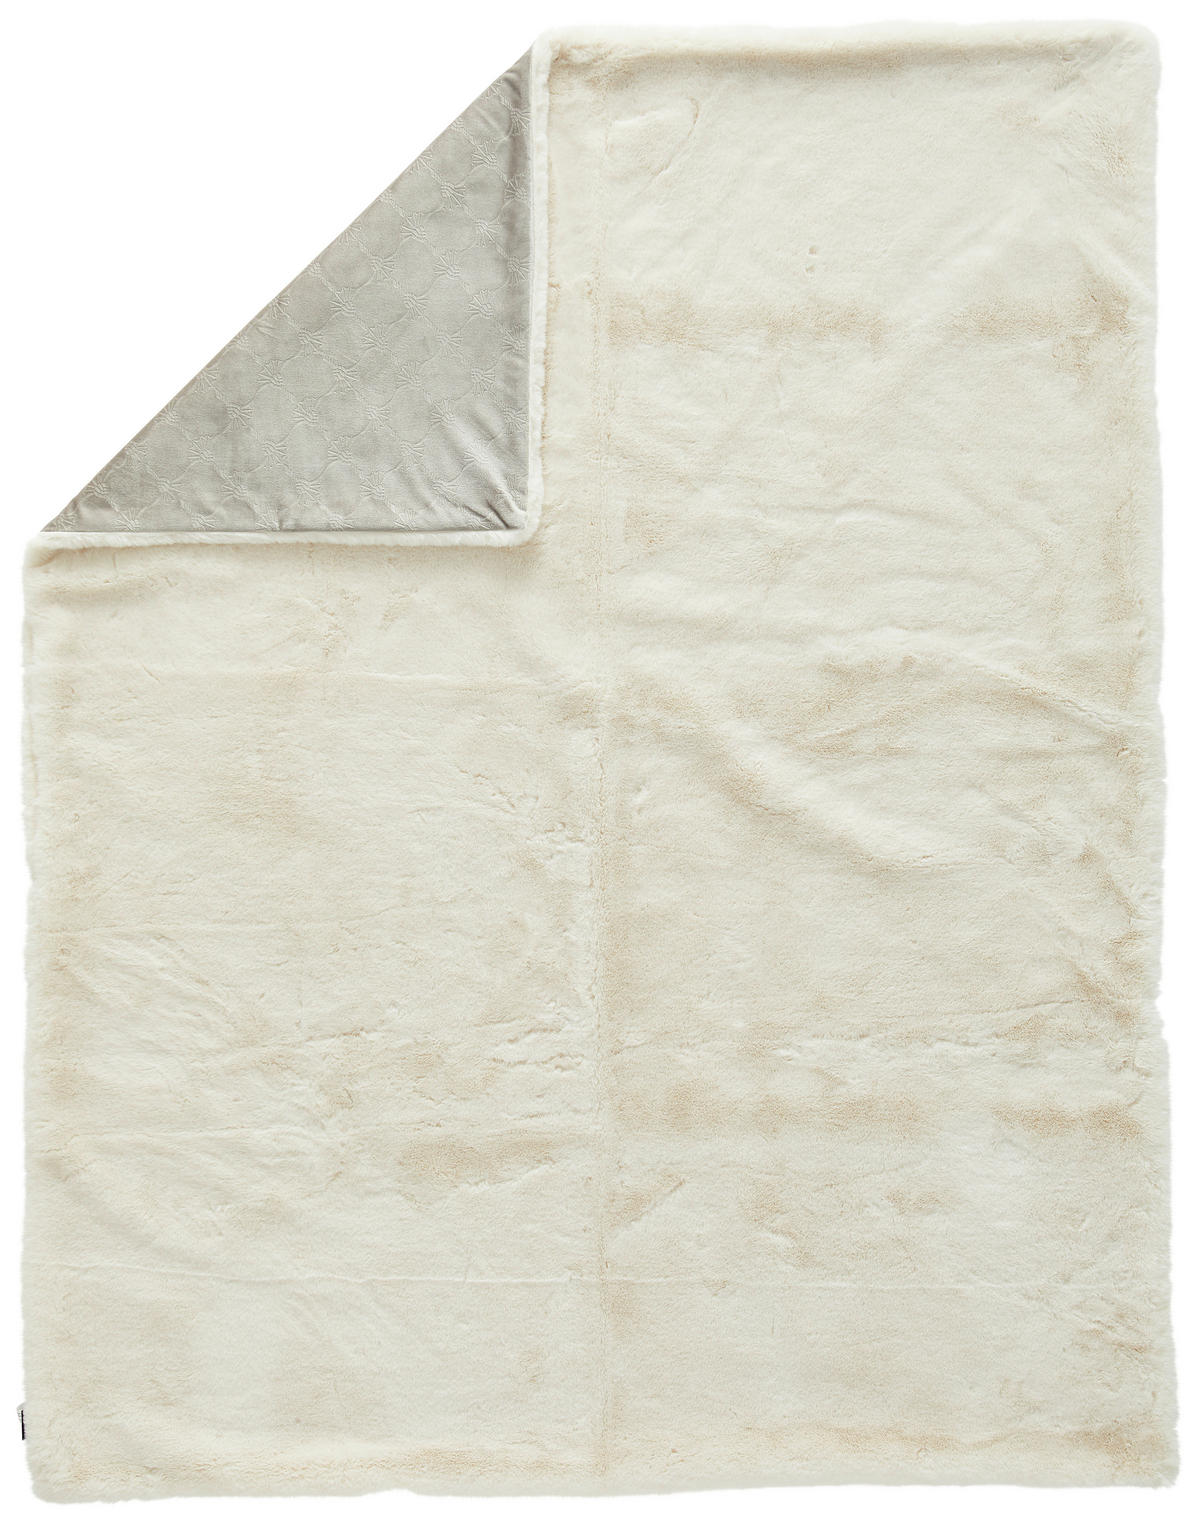 FELLDECKE Smooth 130/170 cm  - Creme/Weiß, Basics, Textil (130/170cm) - Joop!